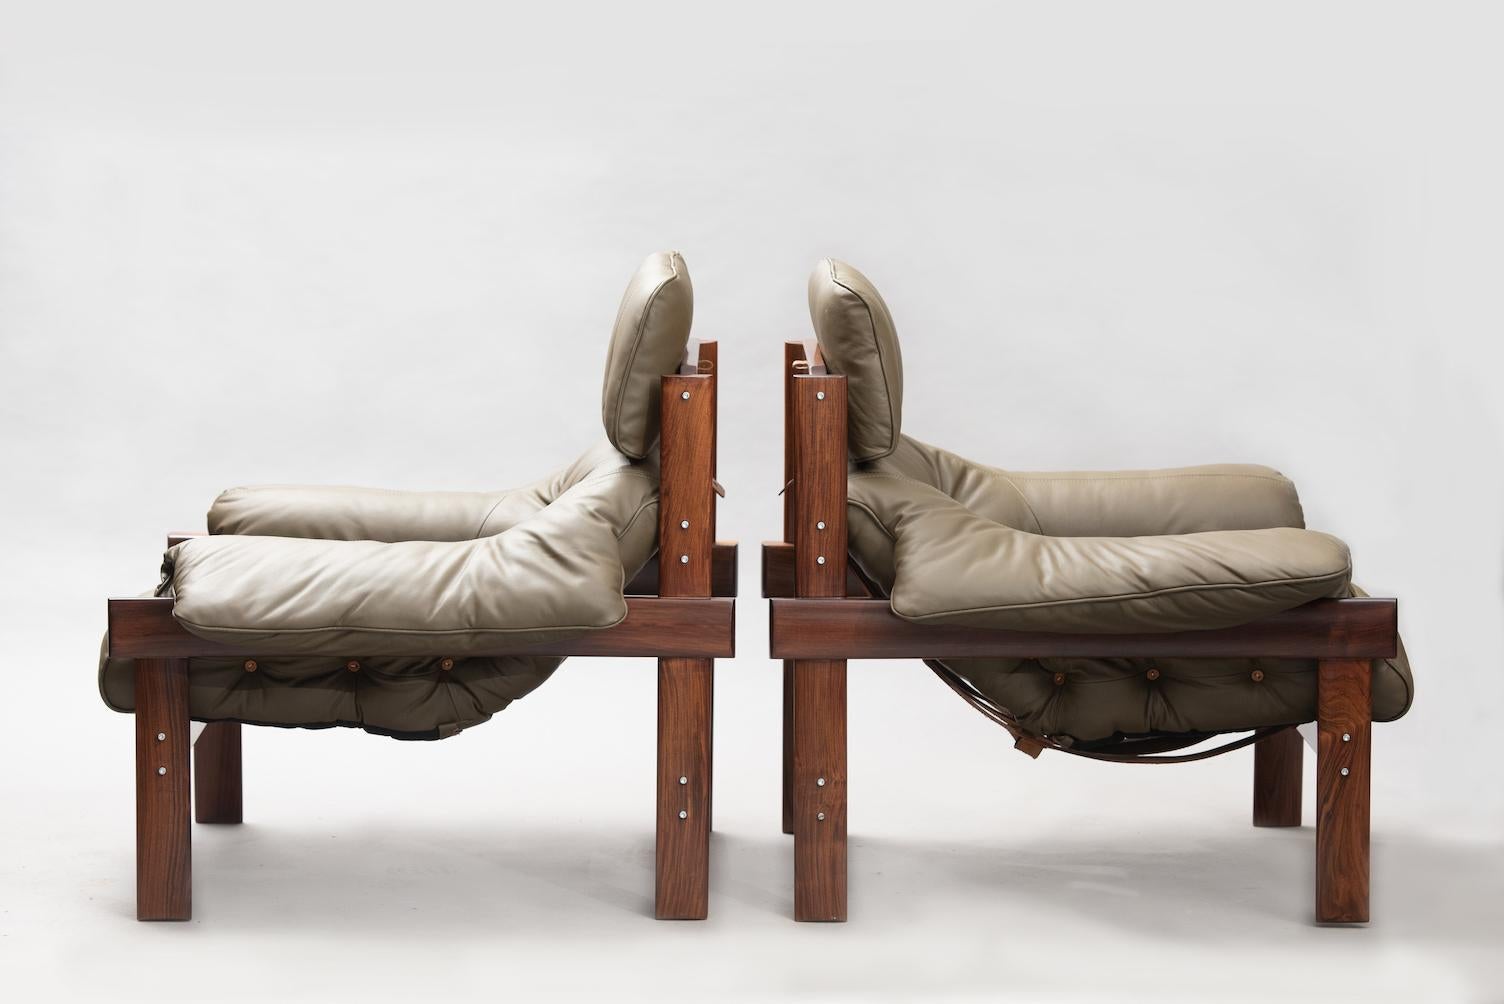 Brazilian Percival Lafer Mid-Century Modern Hardwood Lounge Chairs for Lafer, Brazil 1960s